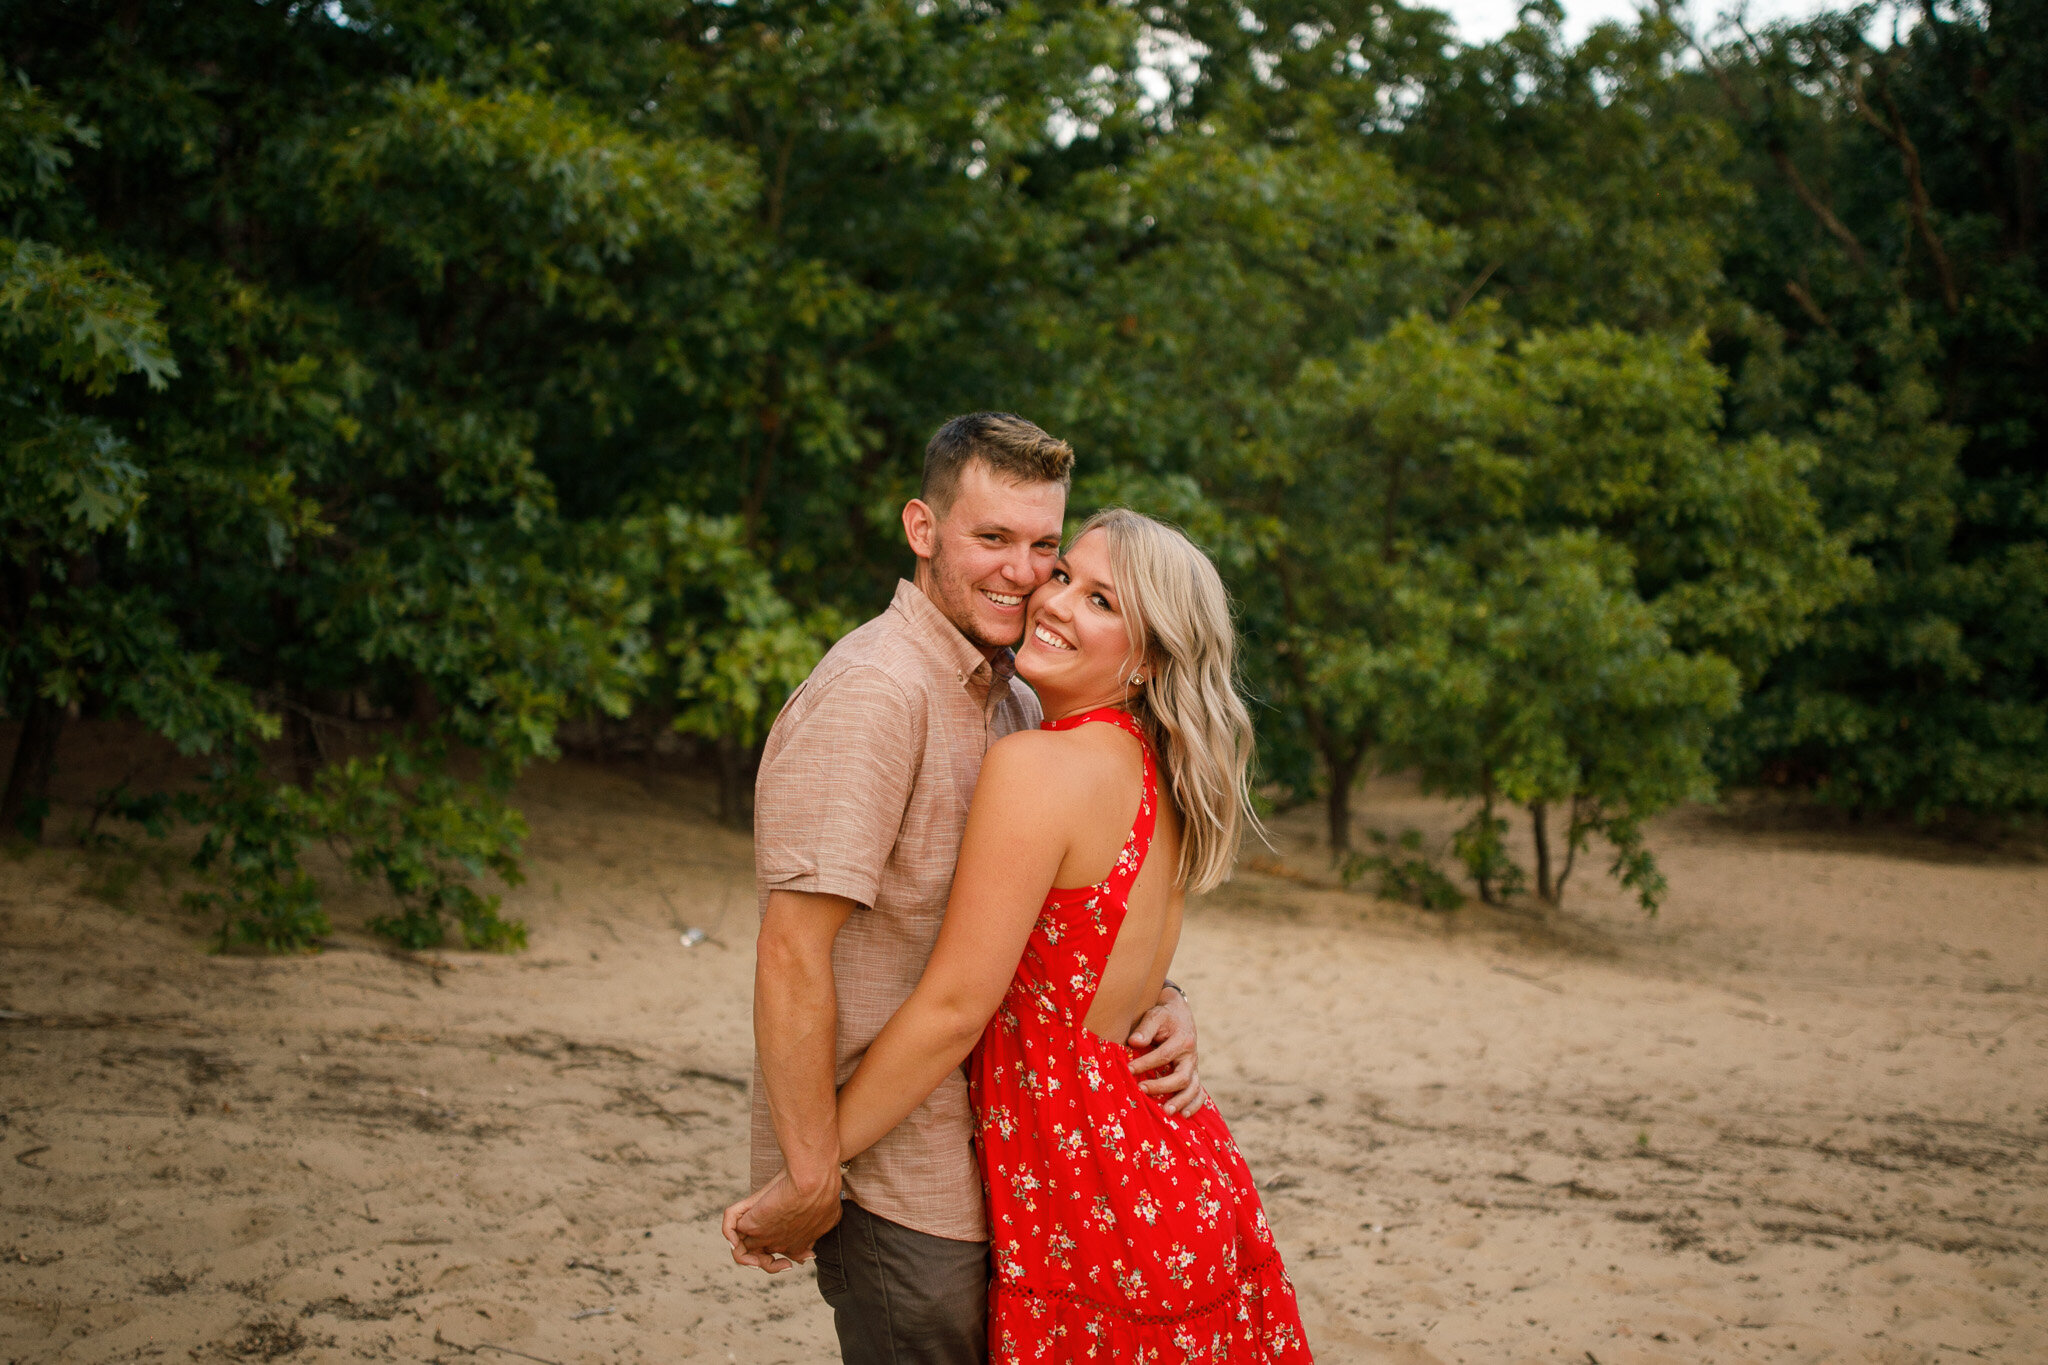 Chris and Kaleen Summer 2020 - Provin Trails - Grand Rapids Wedding Photographer - West Michigan Wedding Photographer - J Darling Photo 020.jpg